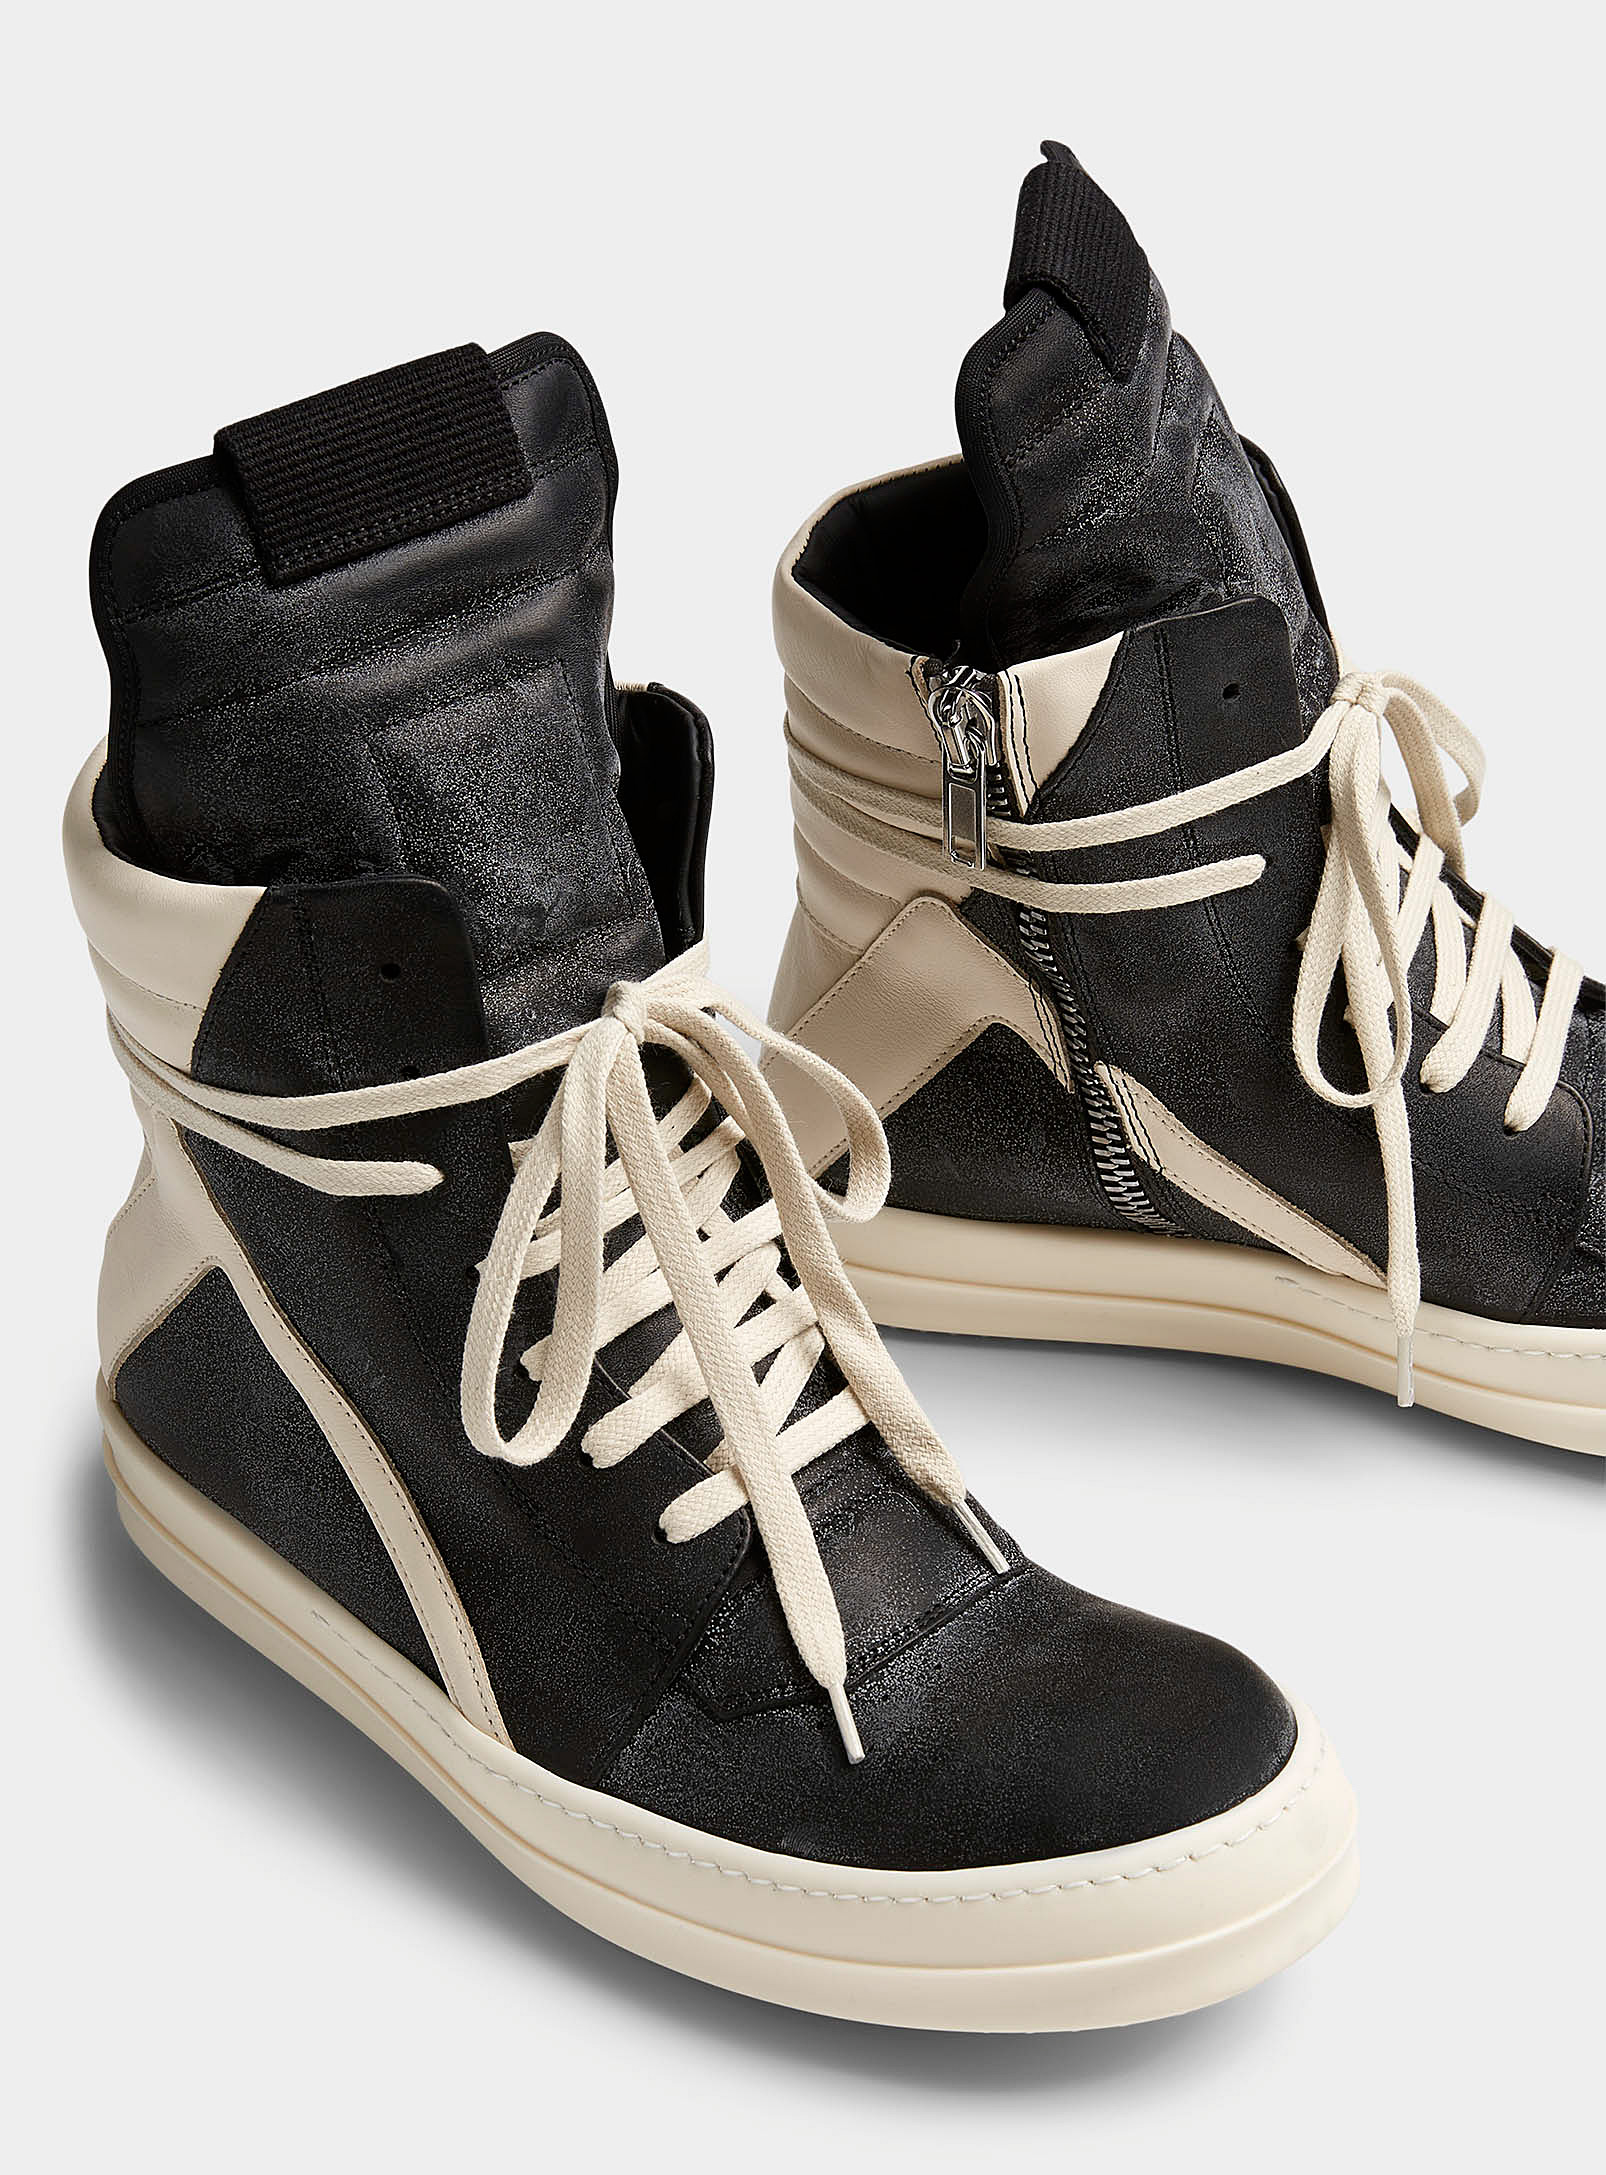 Rick Owens - Chaussures Le Sneaker Geobasket Homme